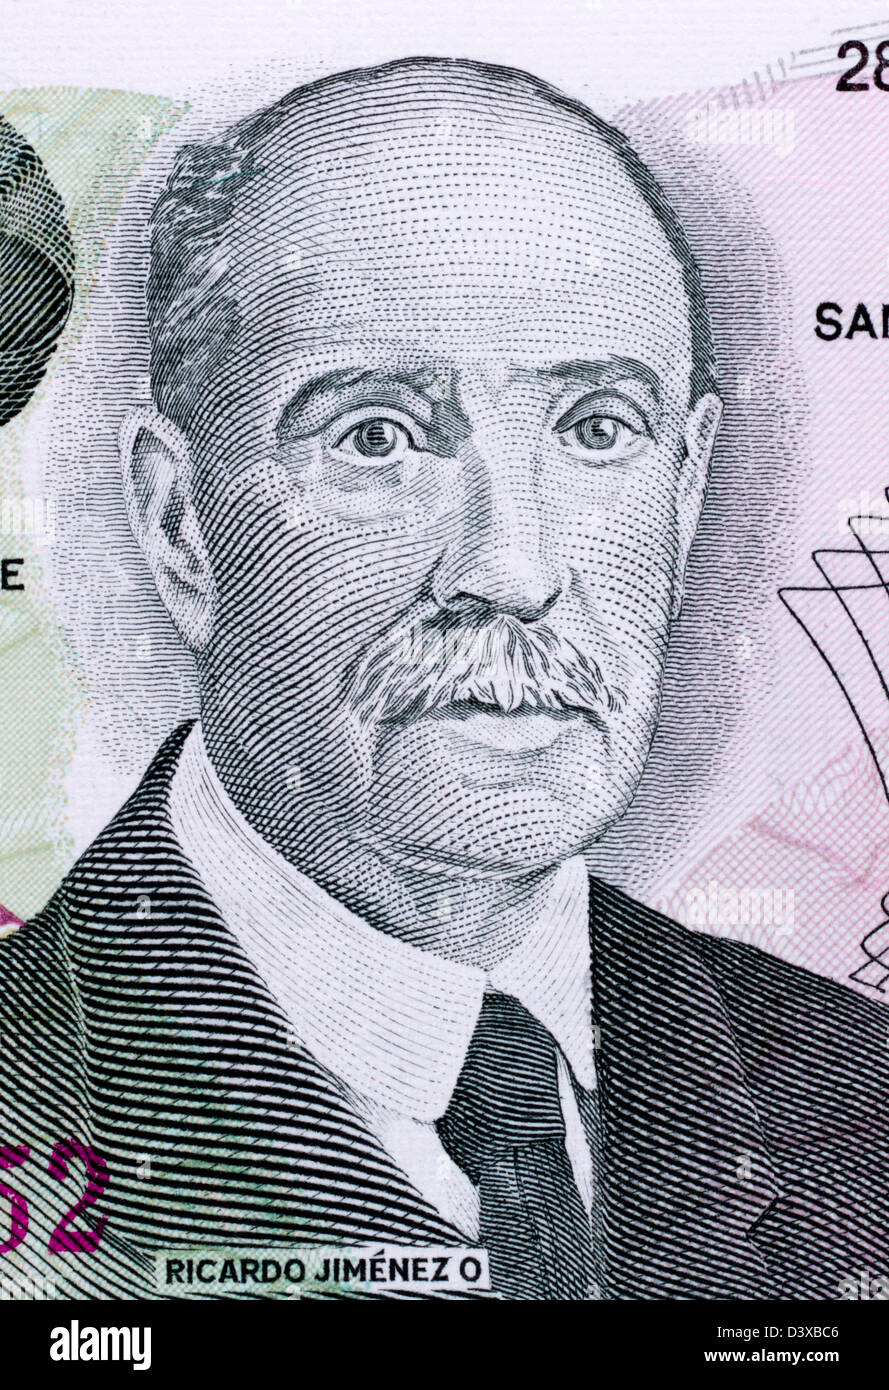 Ricardo Jimenez Oreamuno (1859-19458) on 100 Colones 1993 Banknote from Costa Rica. Stock Photo